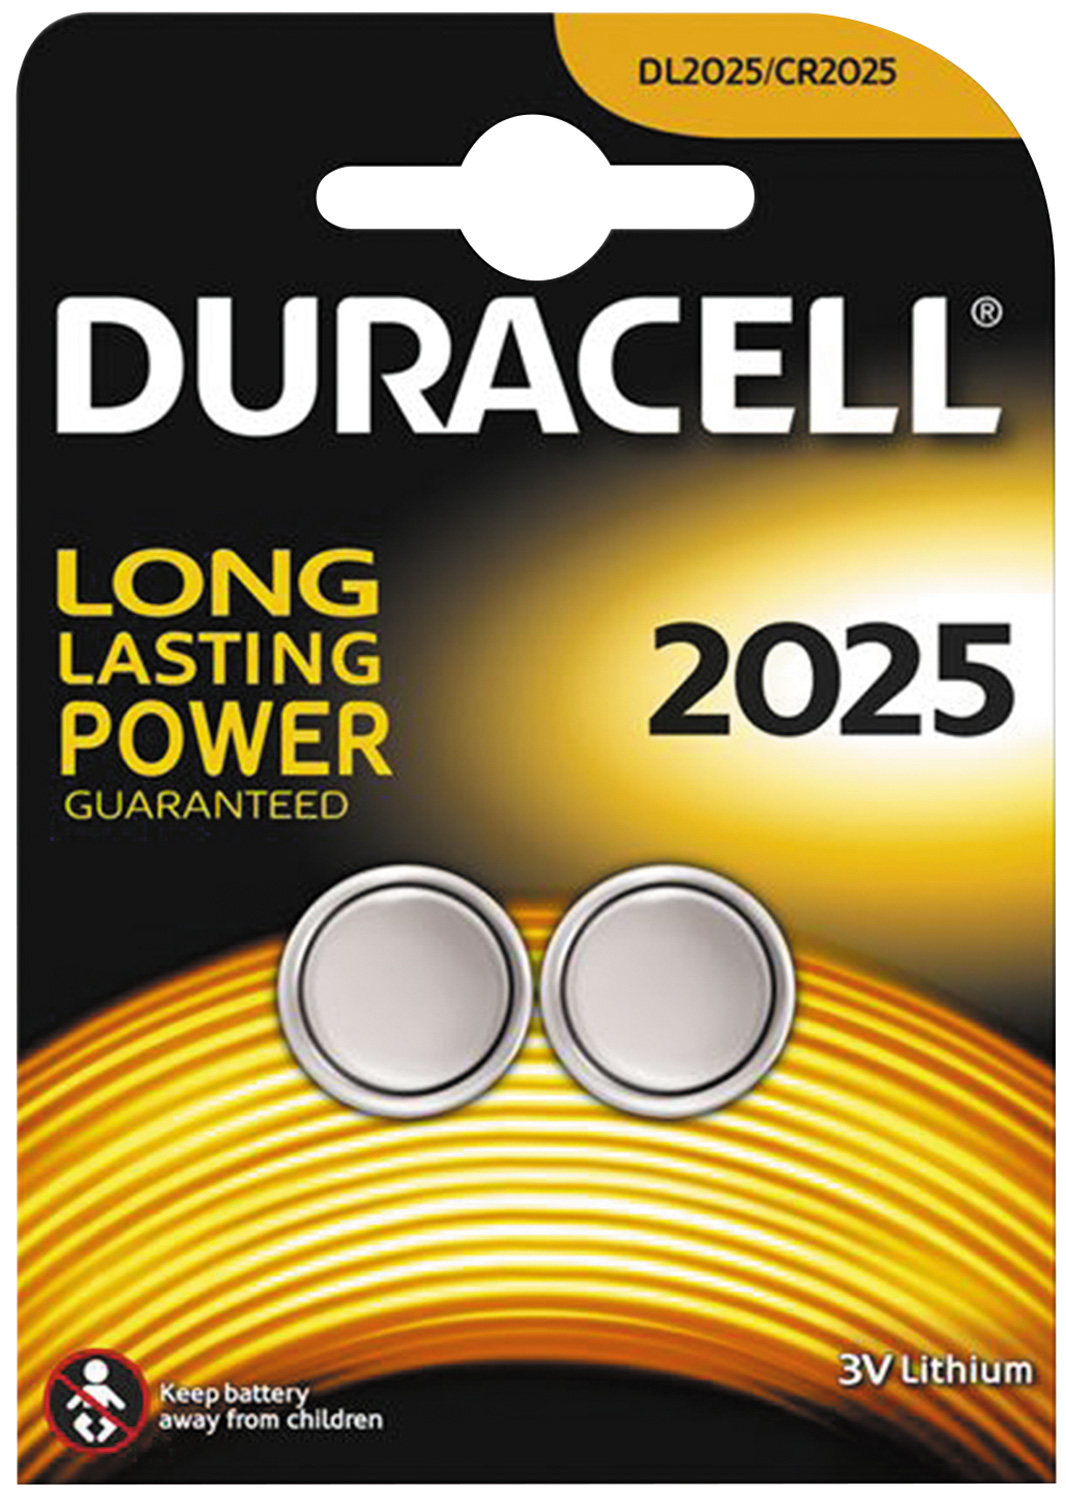 Duracell Lithium Button Battery 1pk - CR2032